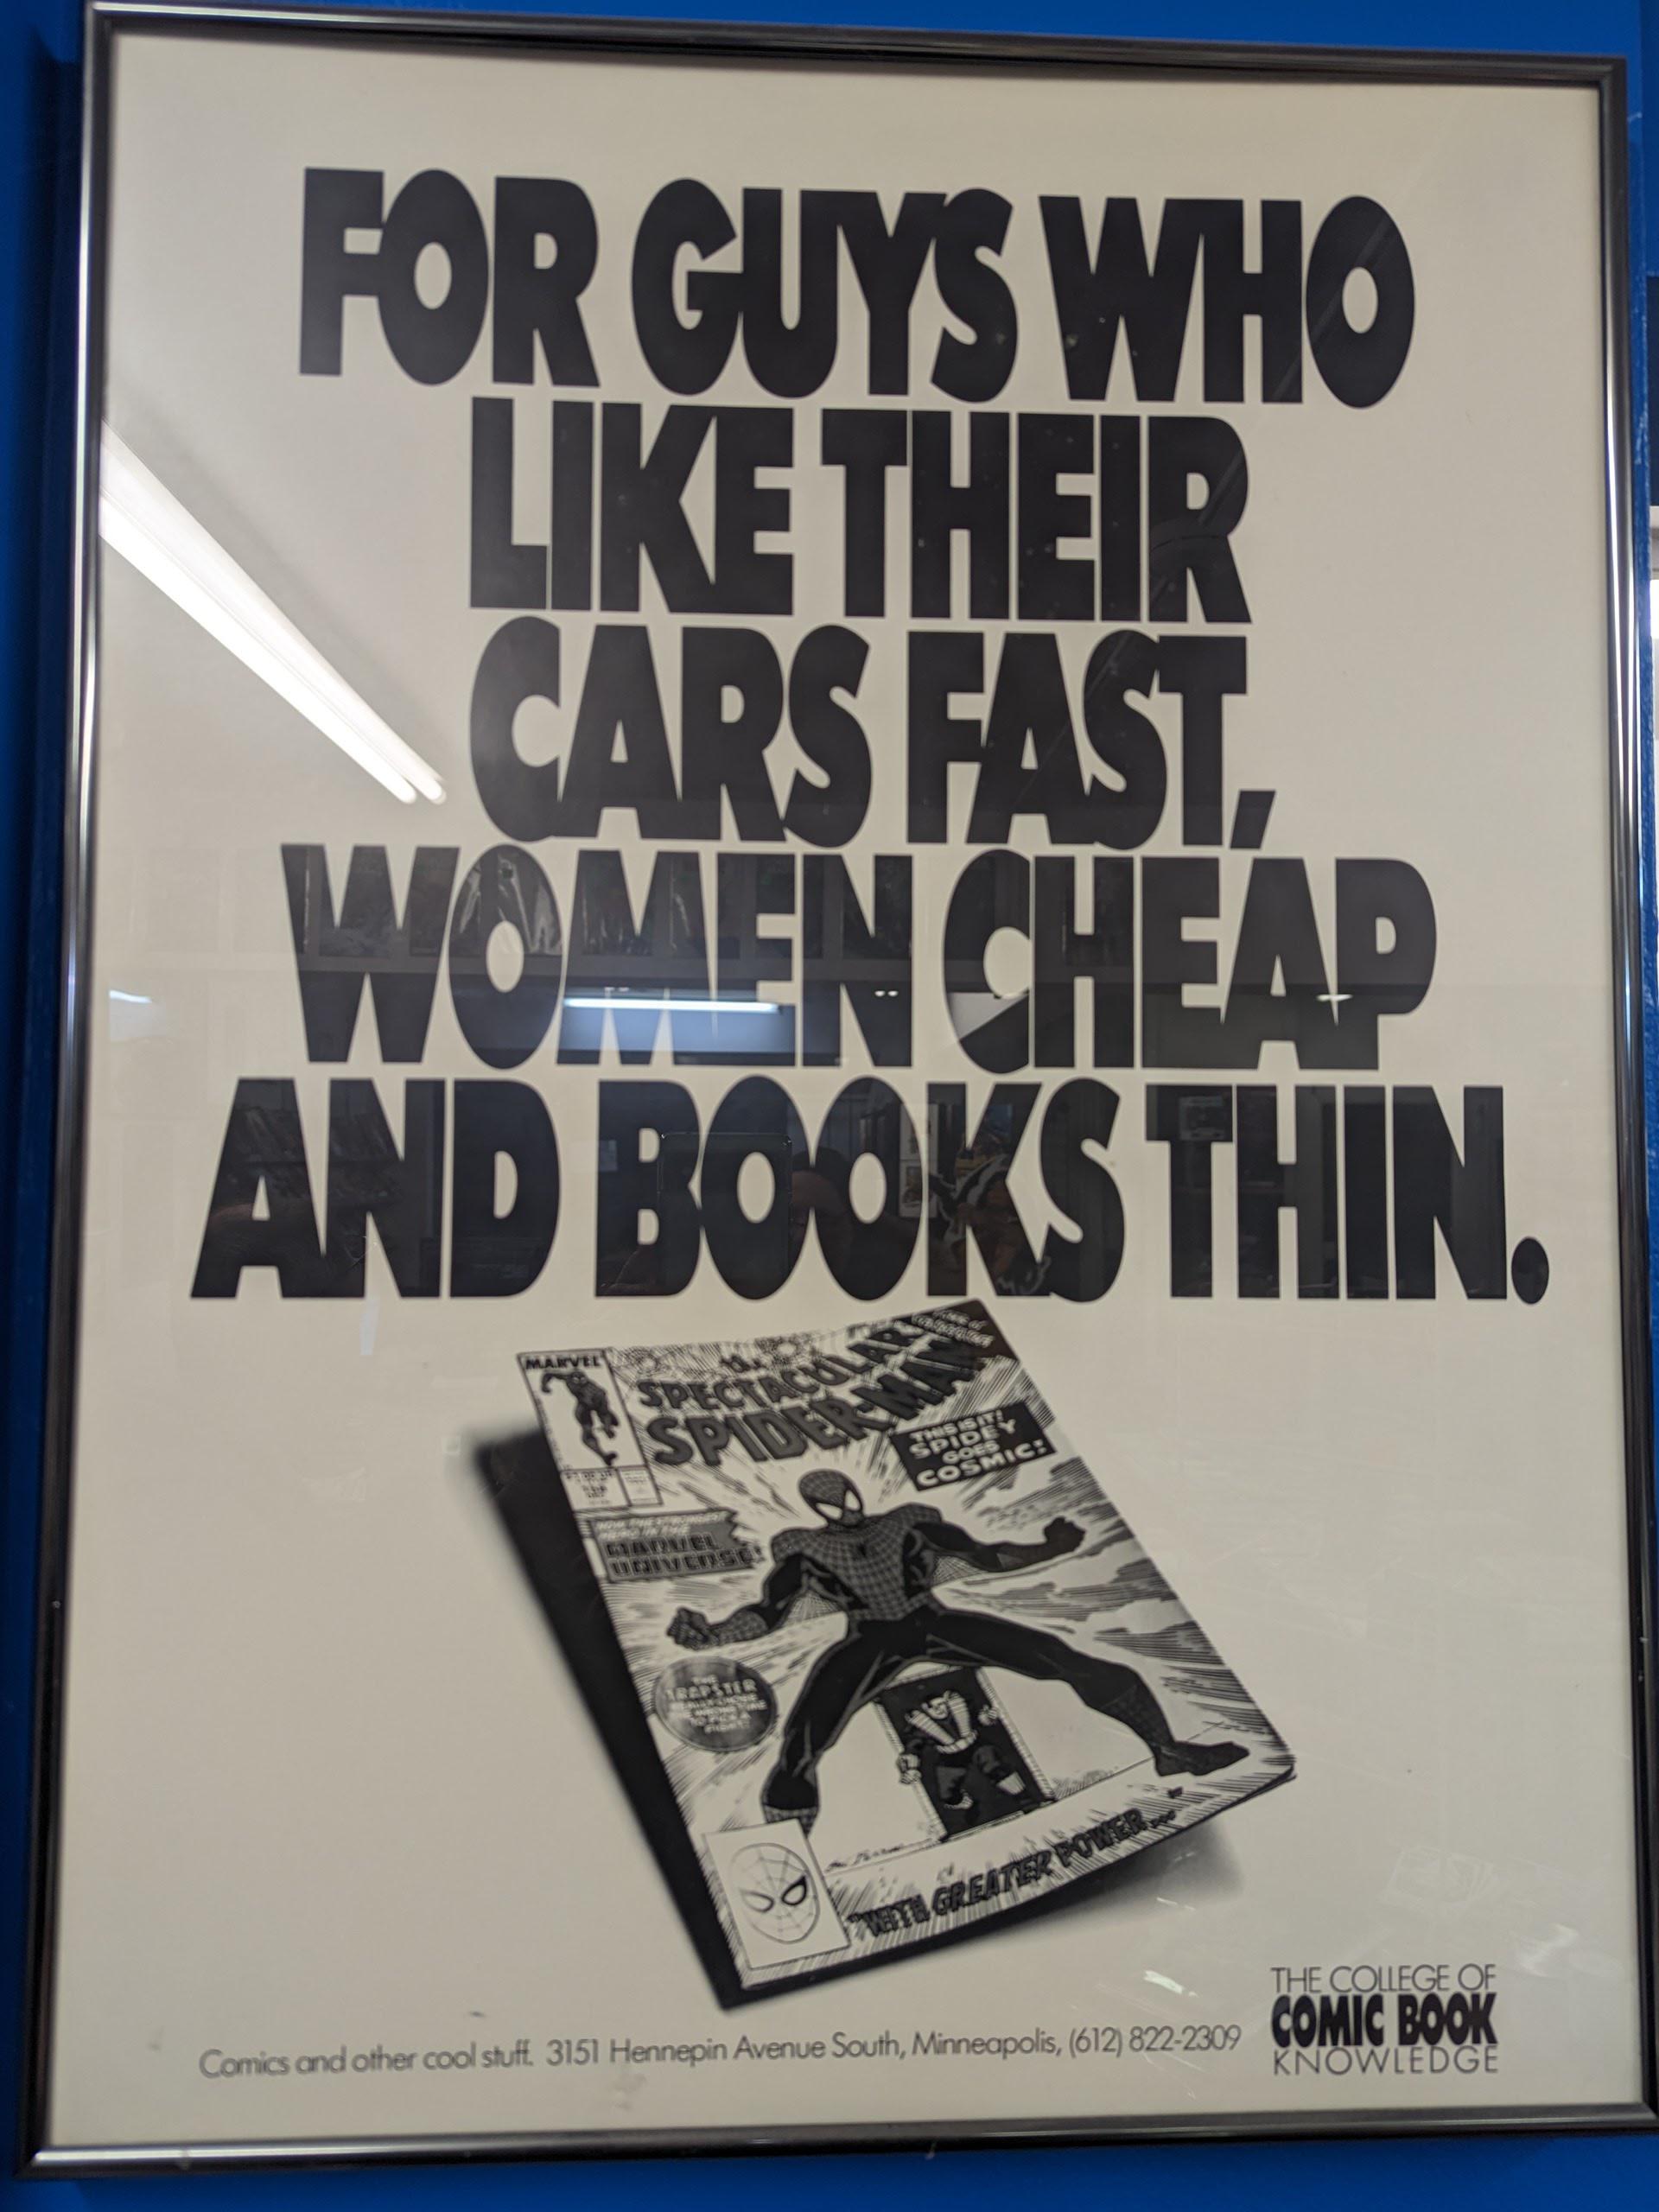 1989 Advertising Poster, Minneapolis Comics Shop.jpg